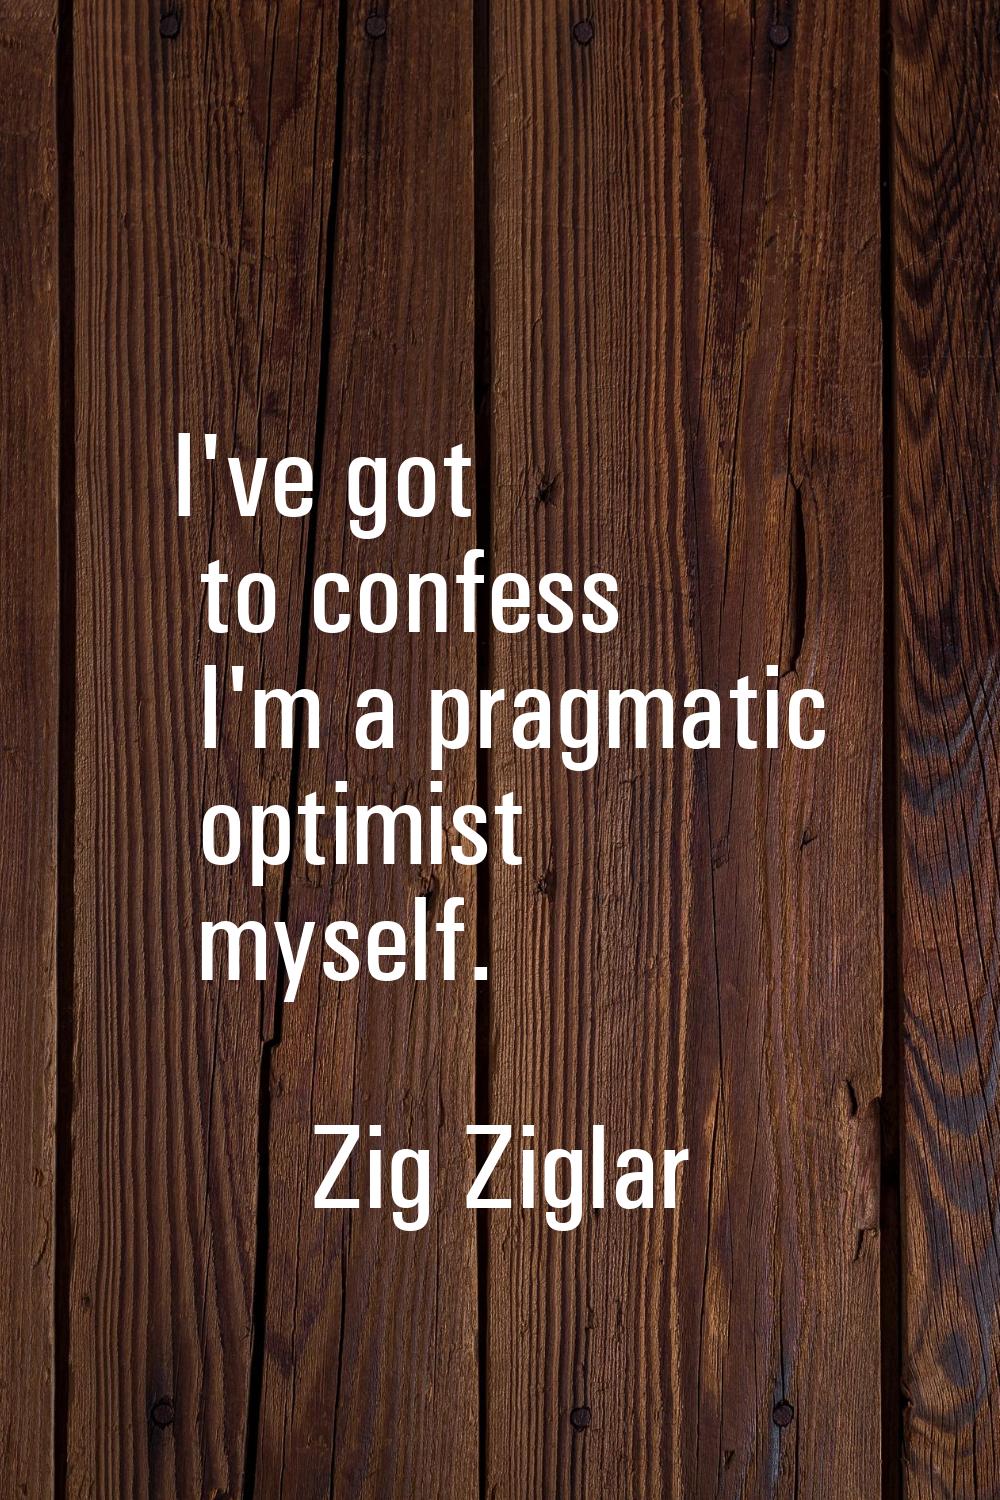 I've got to confess I'm a pragmatic optimist myself.